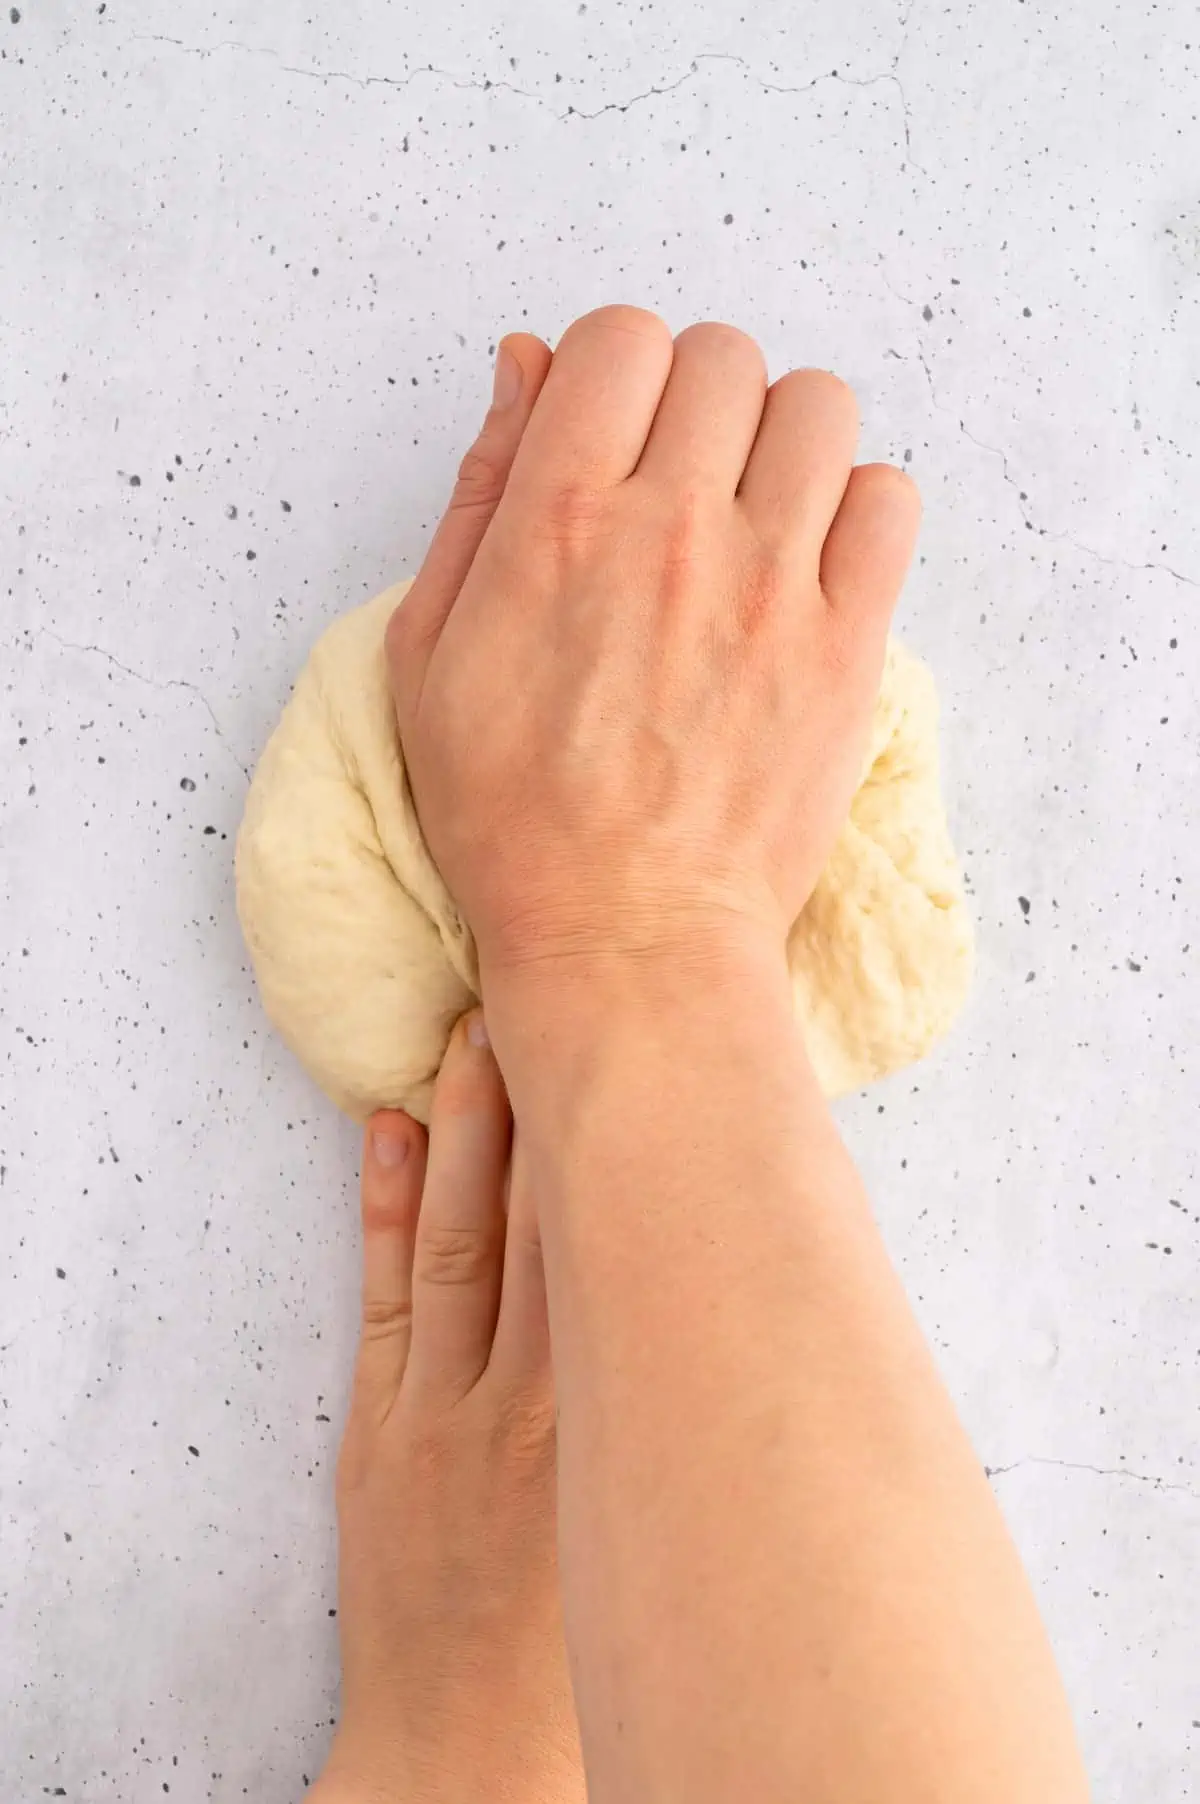 Pesto bread dough being kneaded.